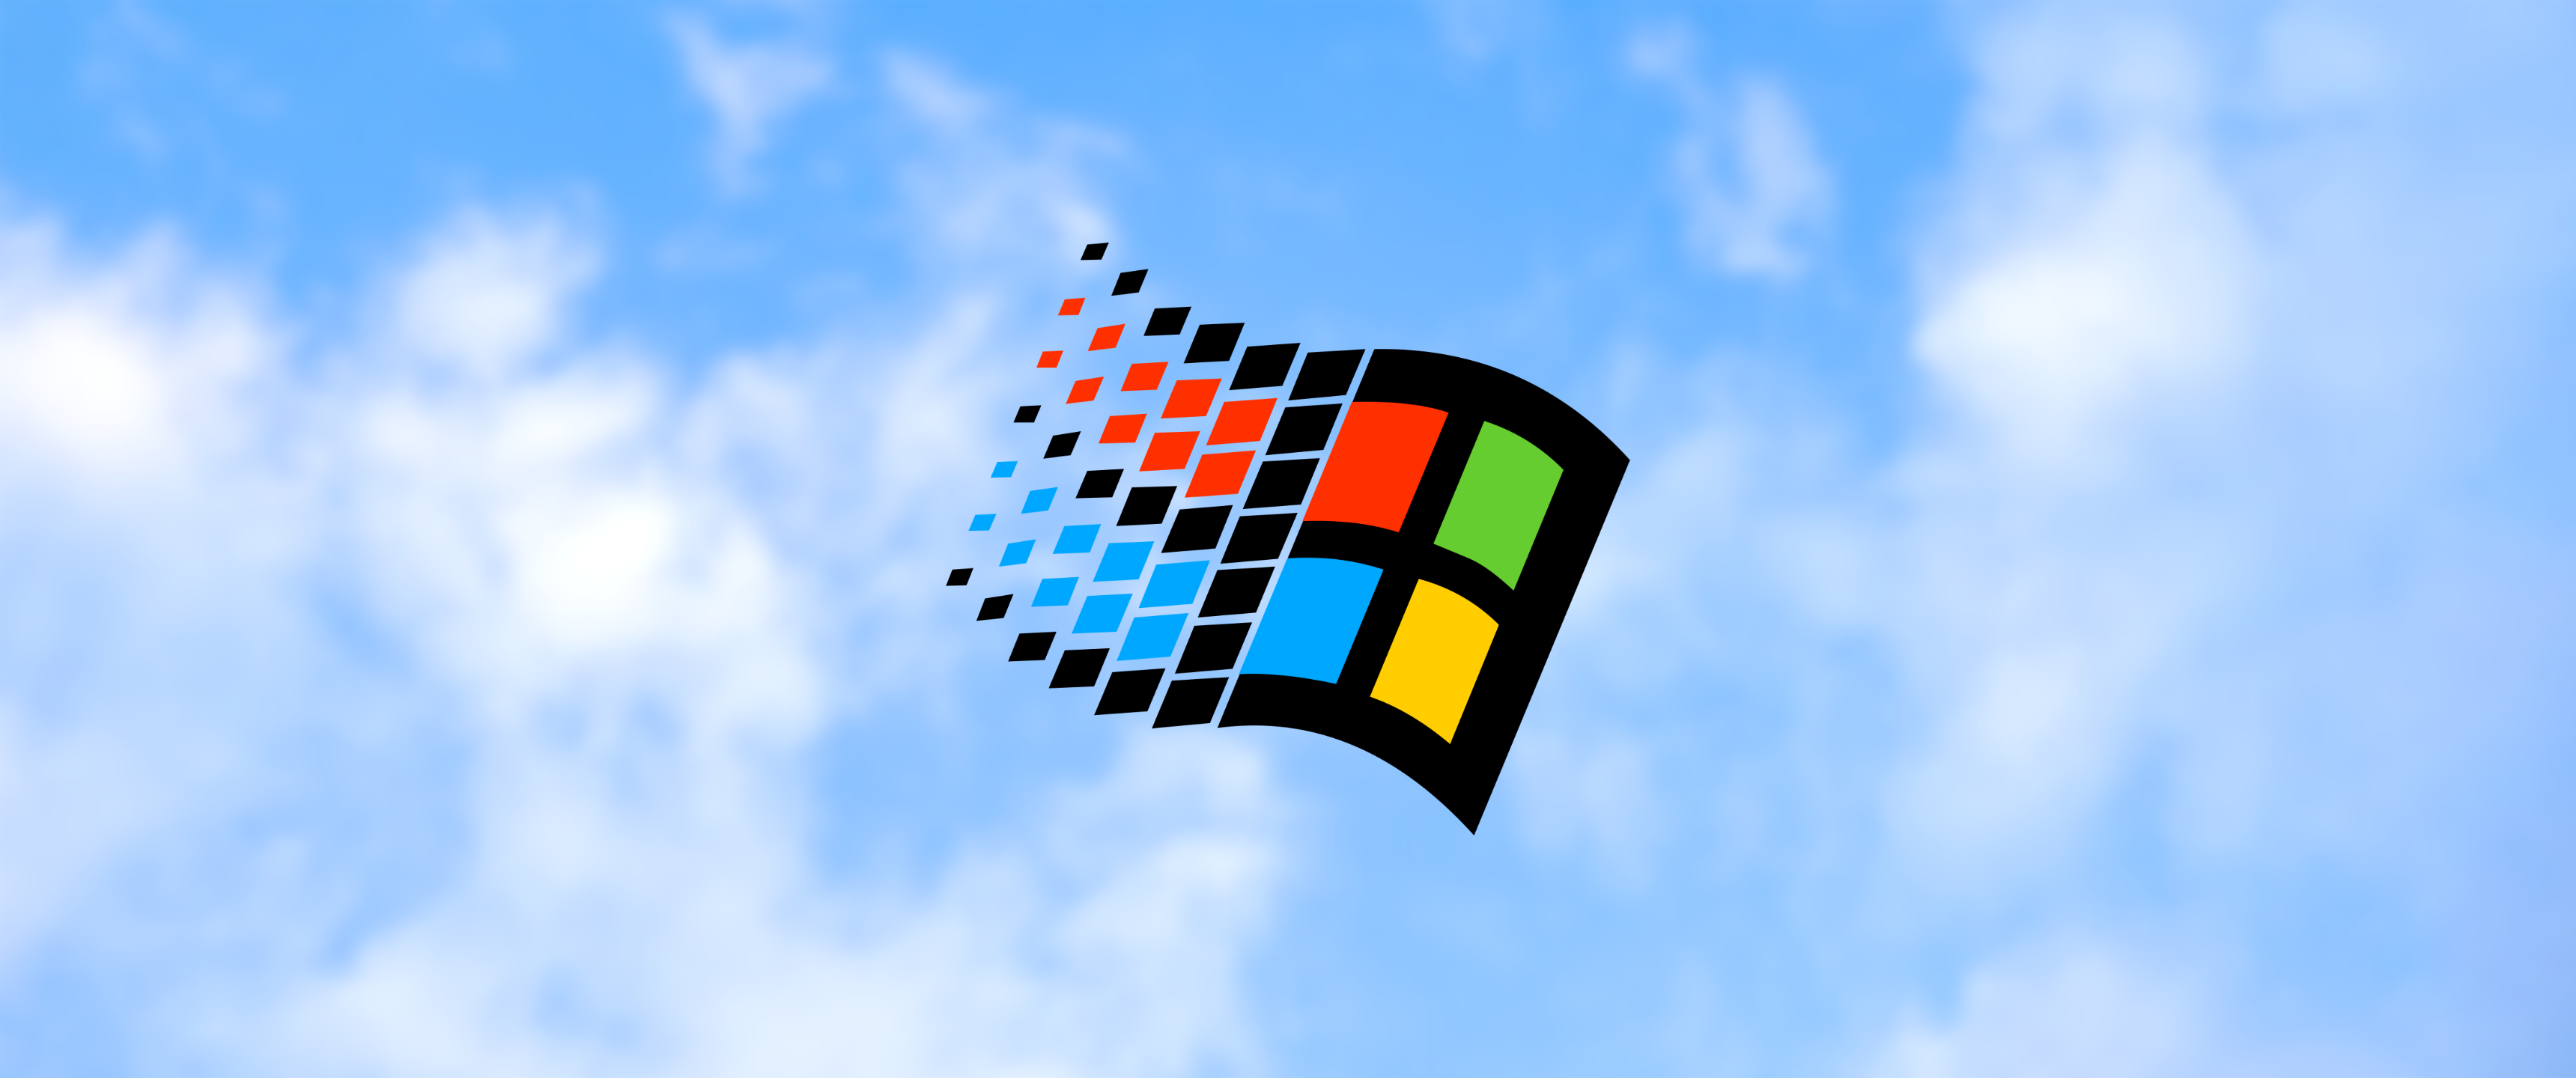 Windows Logo Logo Windows 95 Operating System Clouds Microsoft Windows 3440x1440